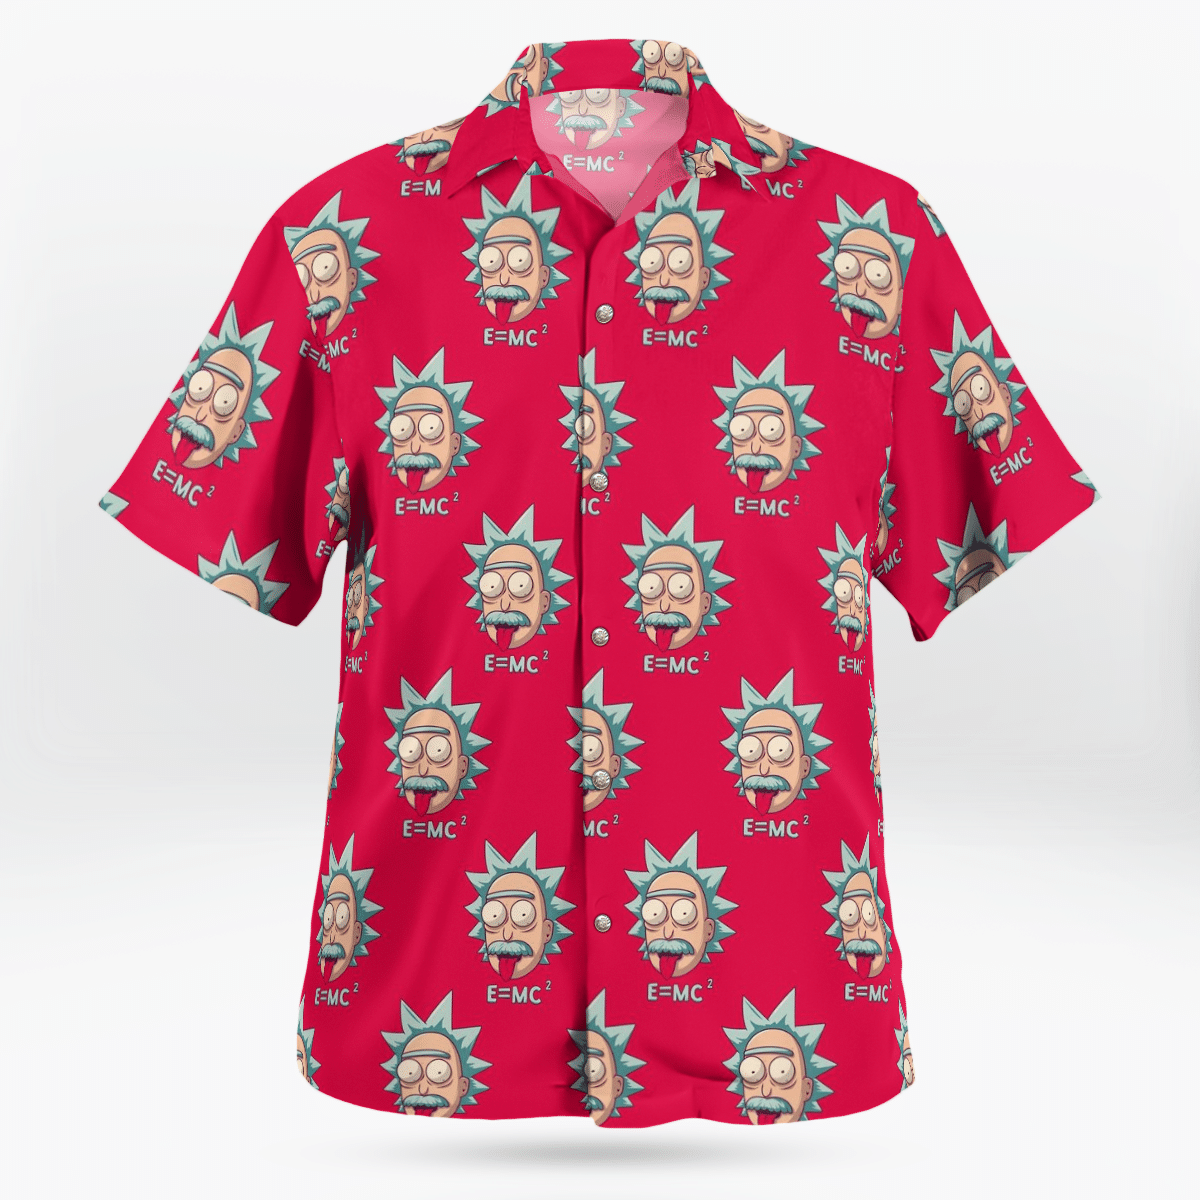 Einstein E=mc2 Hawaiian shirt